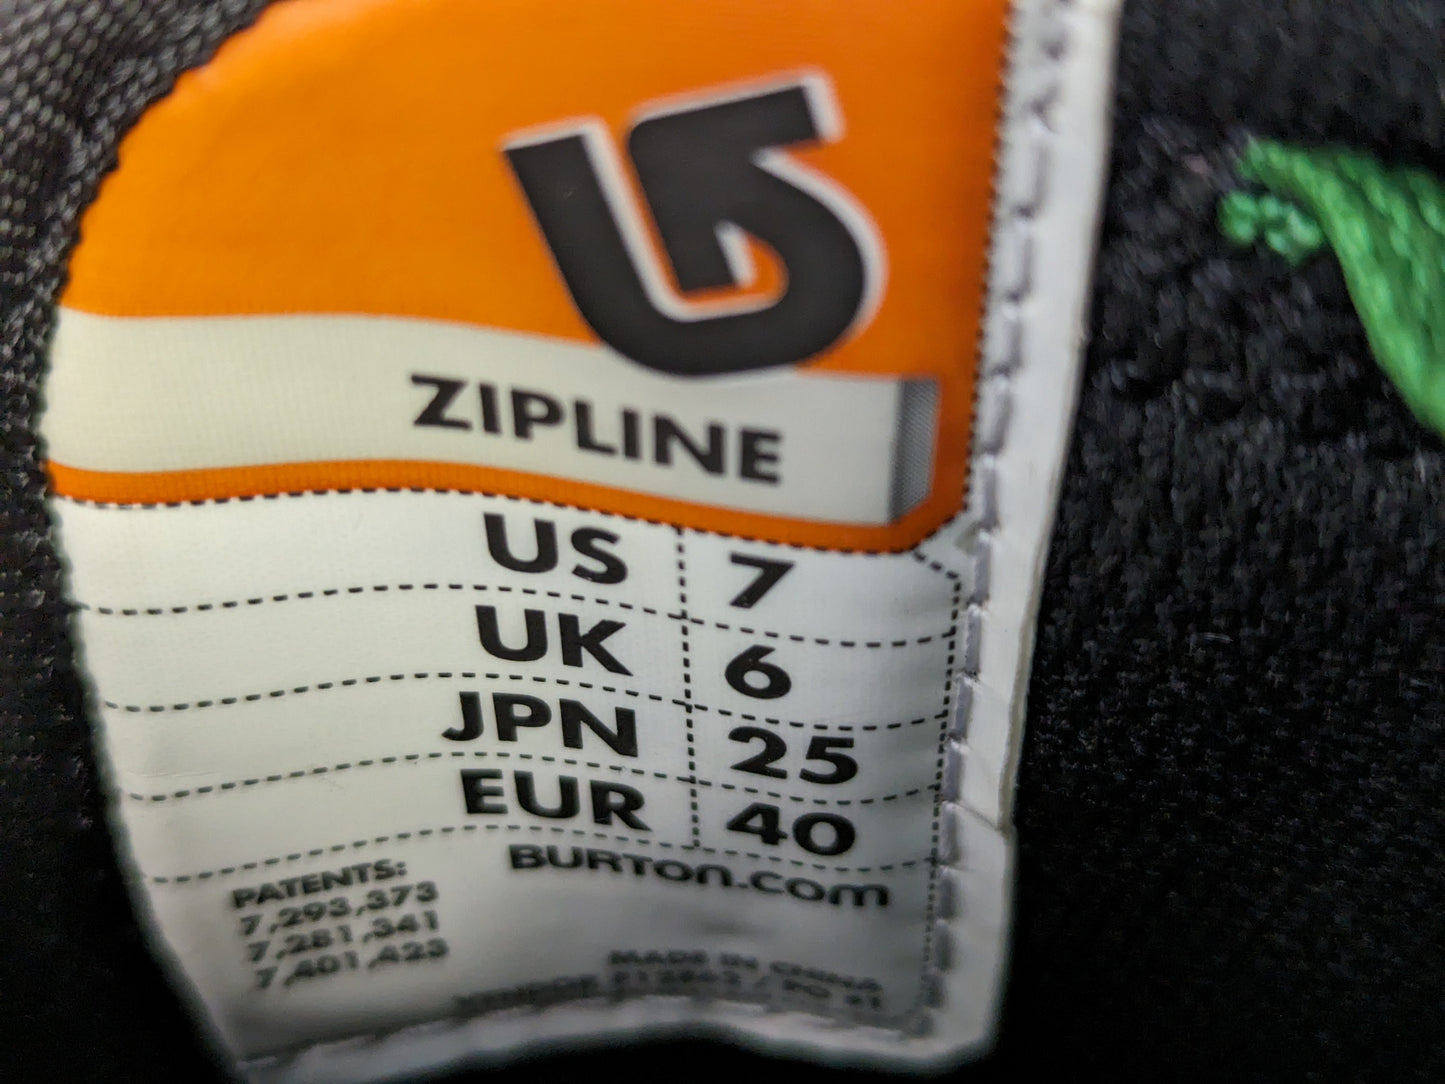 Burton Imprint Zipline Snowboard Boots Size 7 Color Black Condition Used